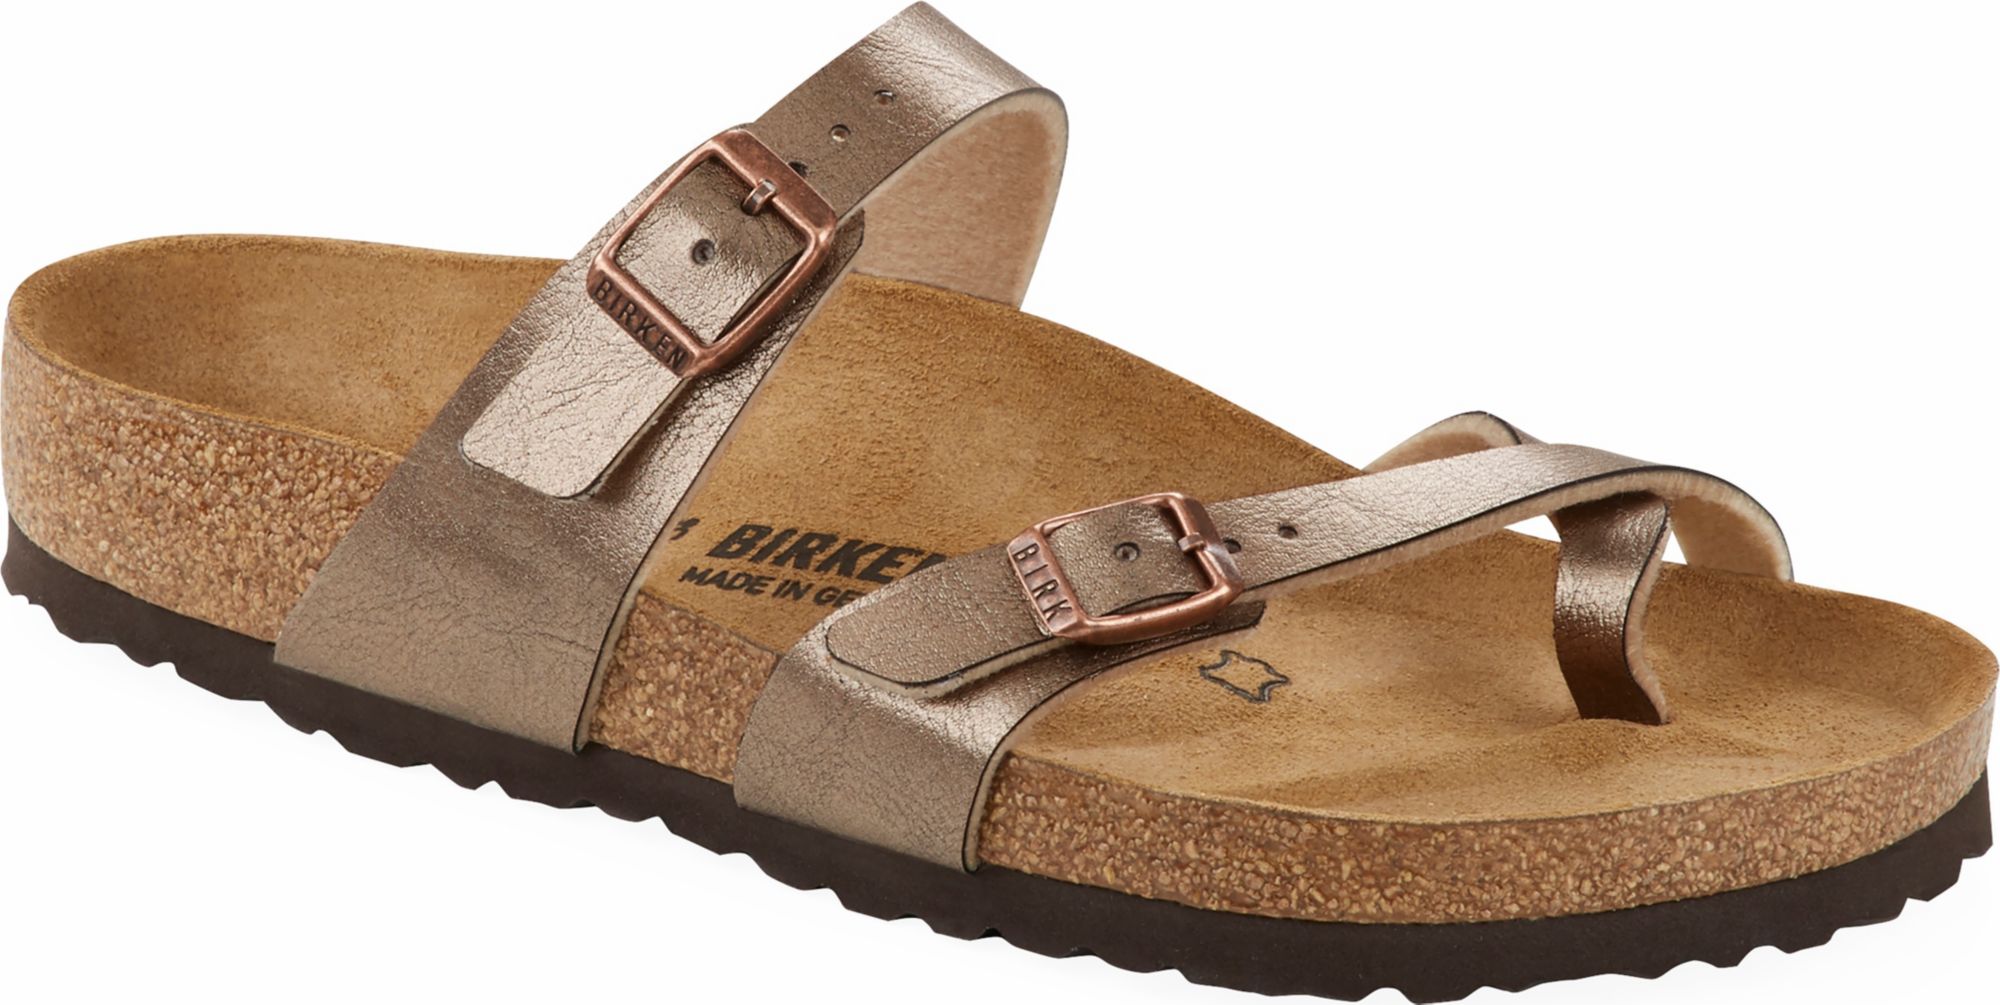 where can i buy birkenstock sandals near me